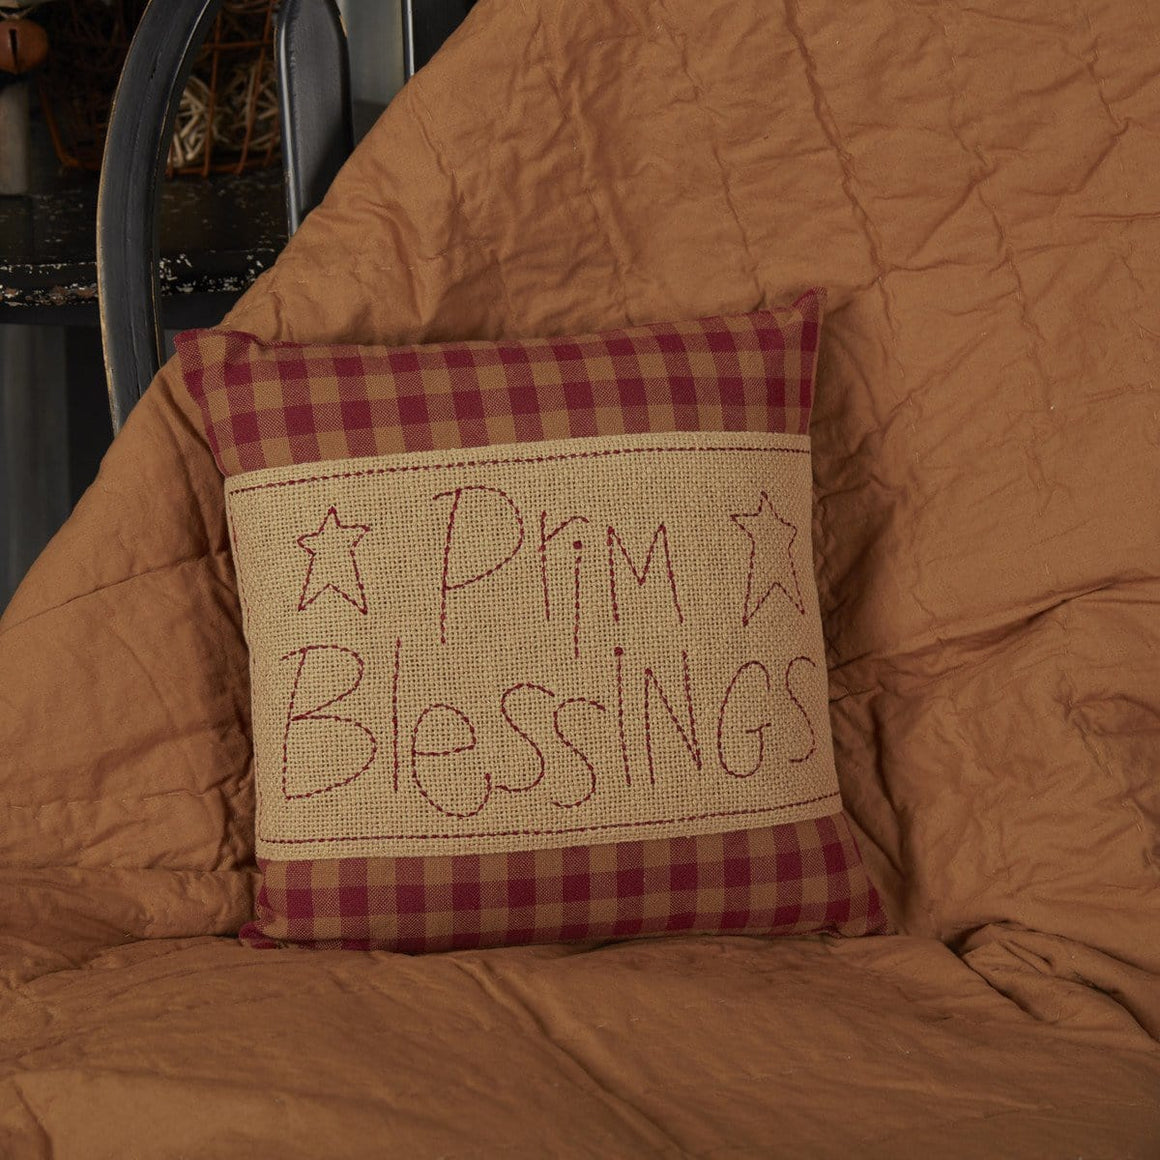 Burgundy Check Prim Blessings Pillow